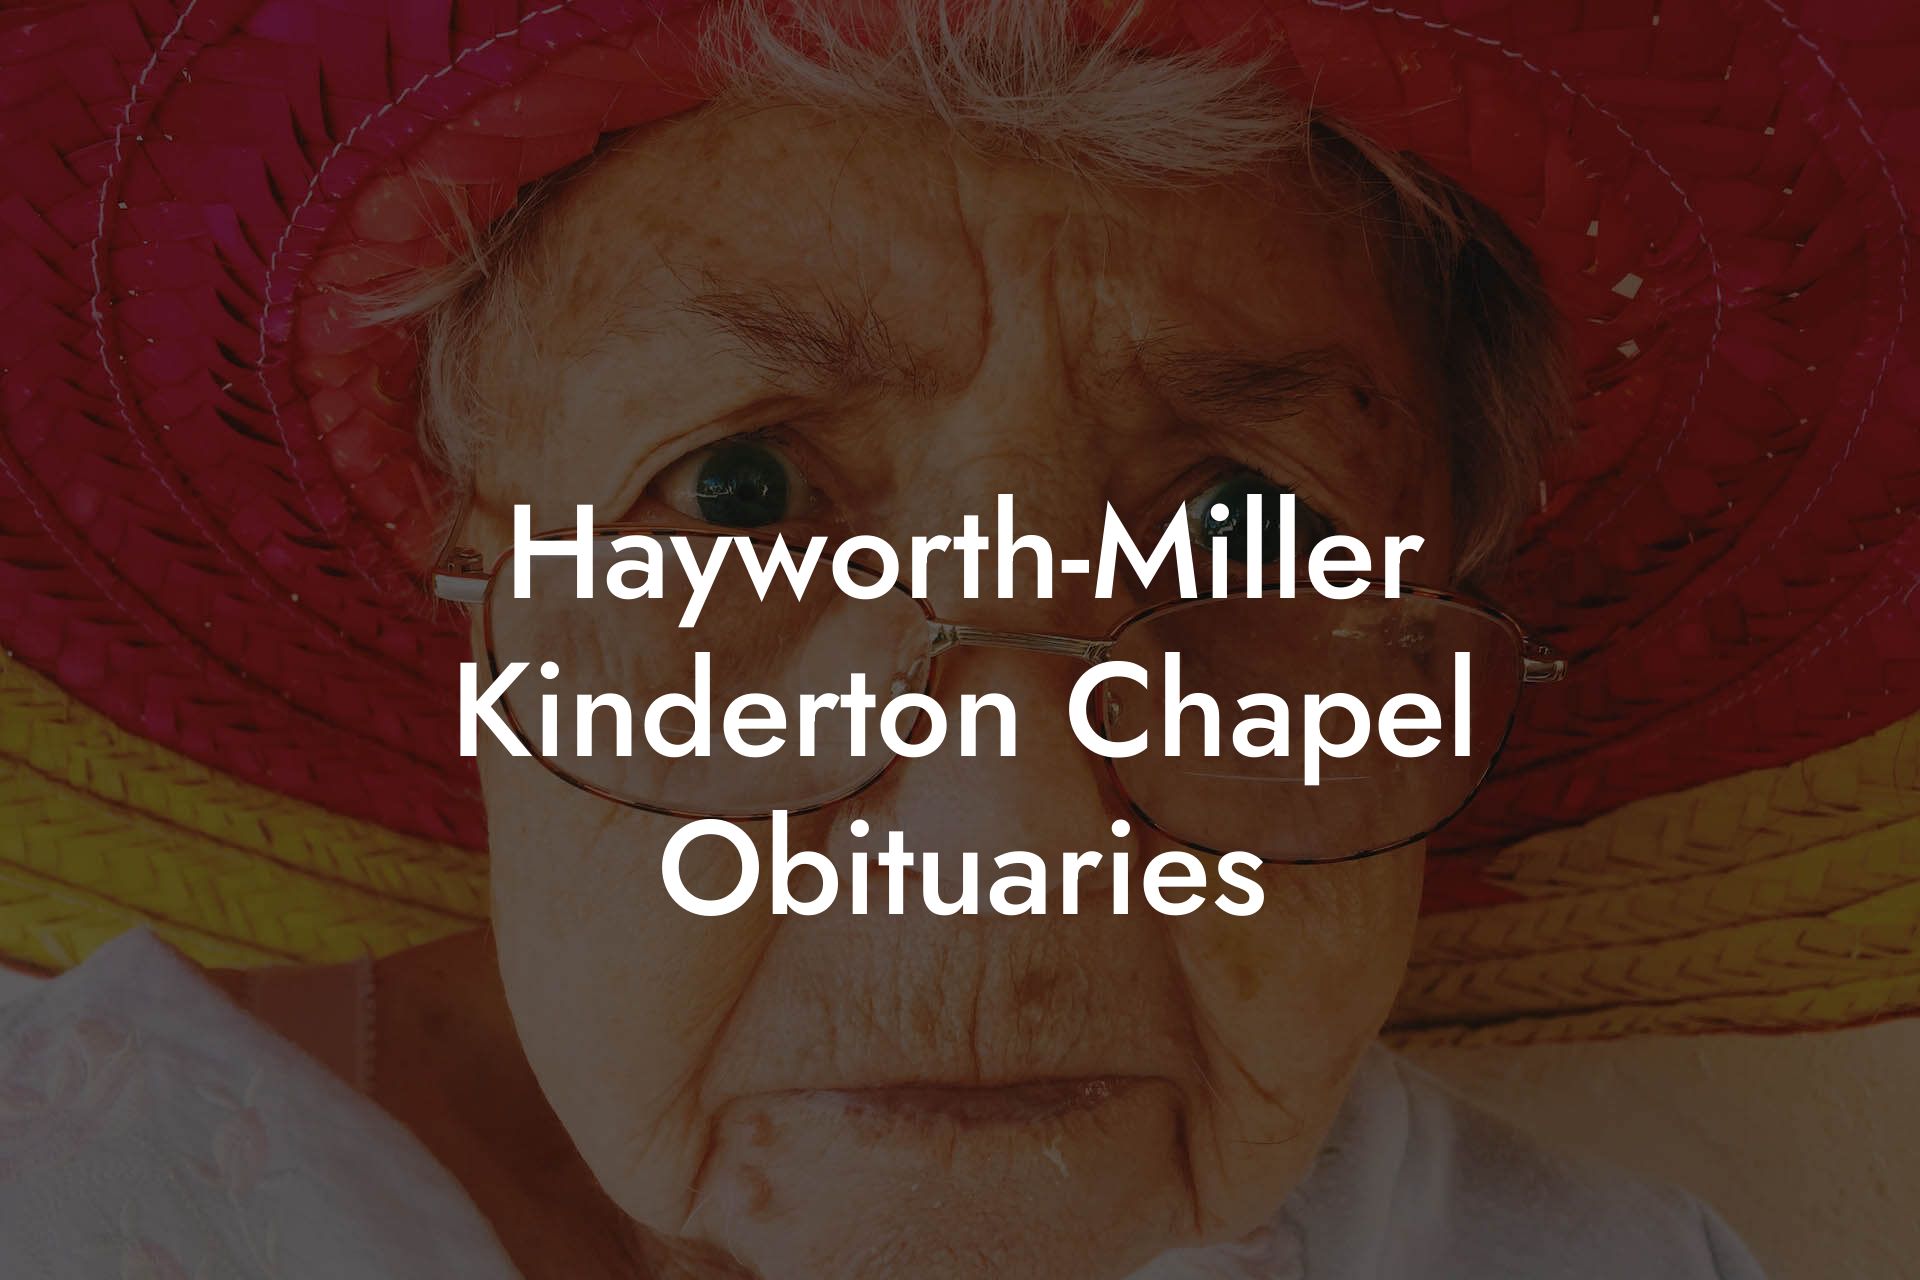 Hayworth-Miller Kinderton Chapel Obituaries